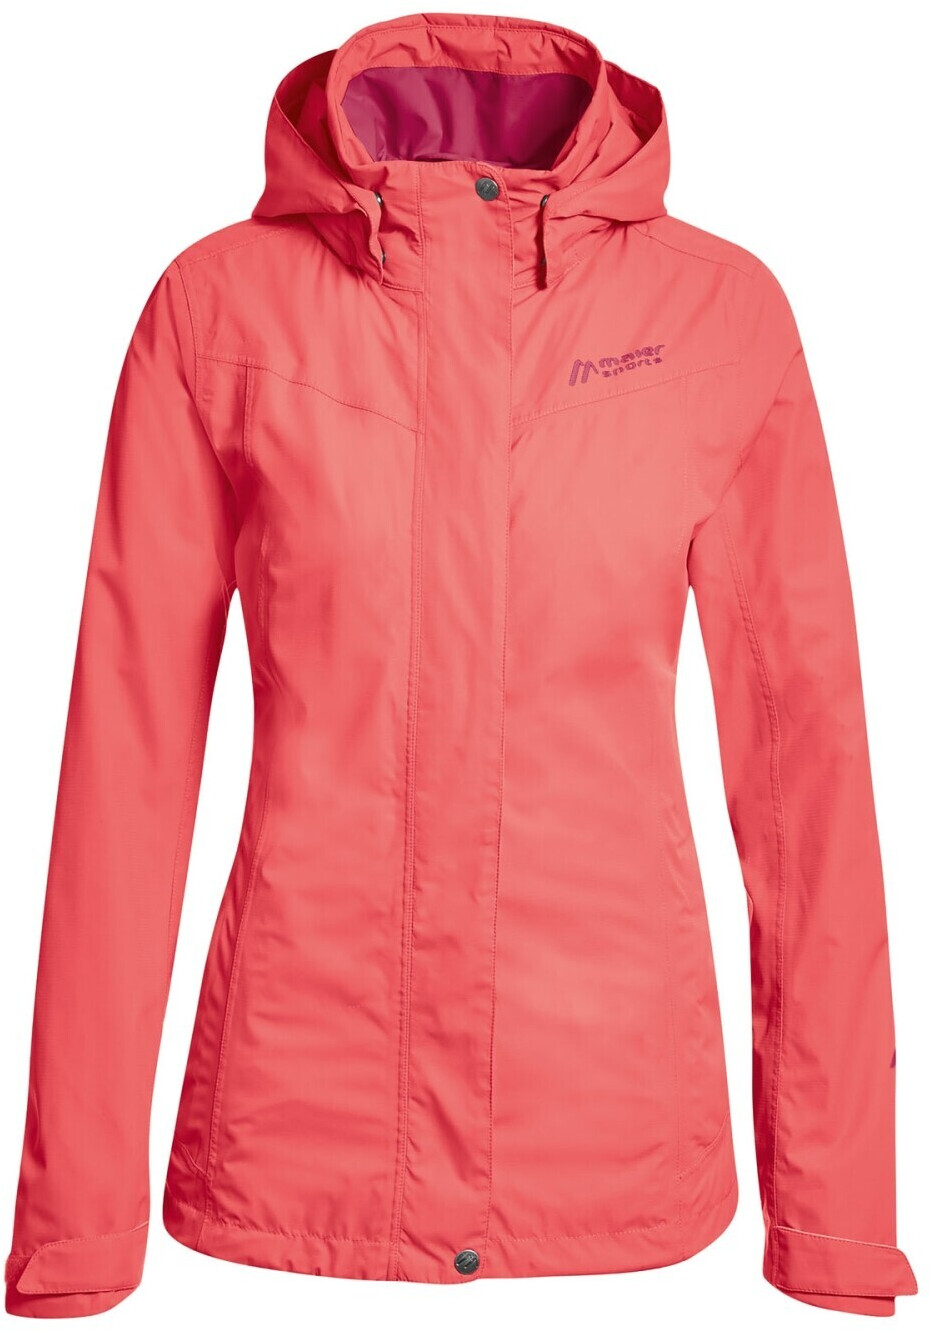 Maier Sports Metor Jacket Women bei pink € 99,90 Preisvergleich | ab paradise